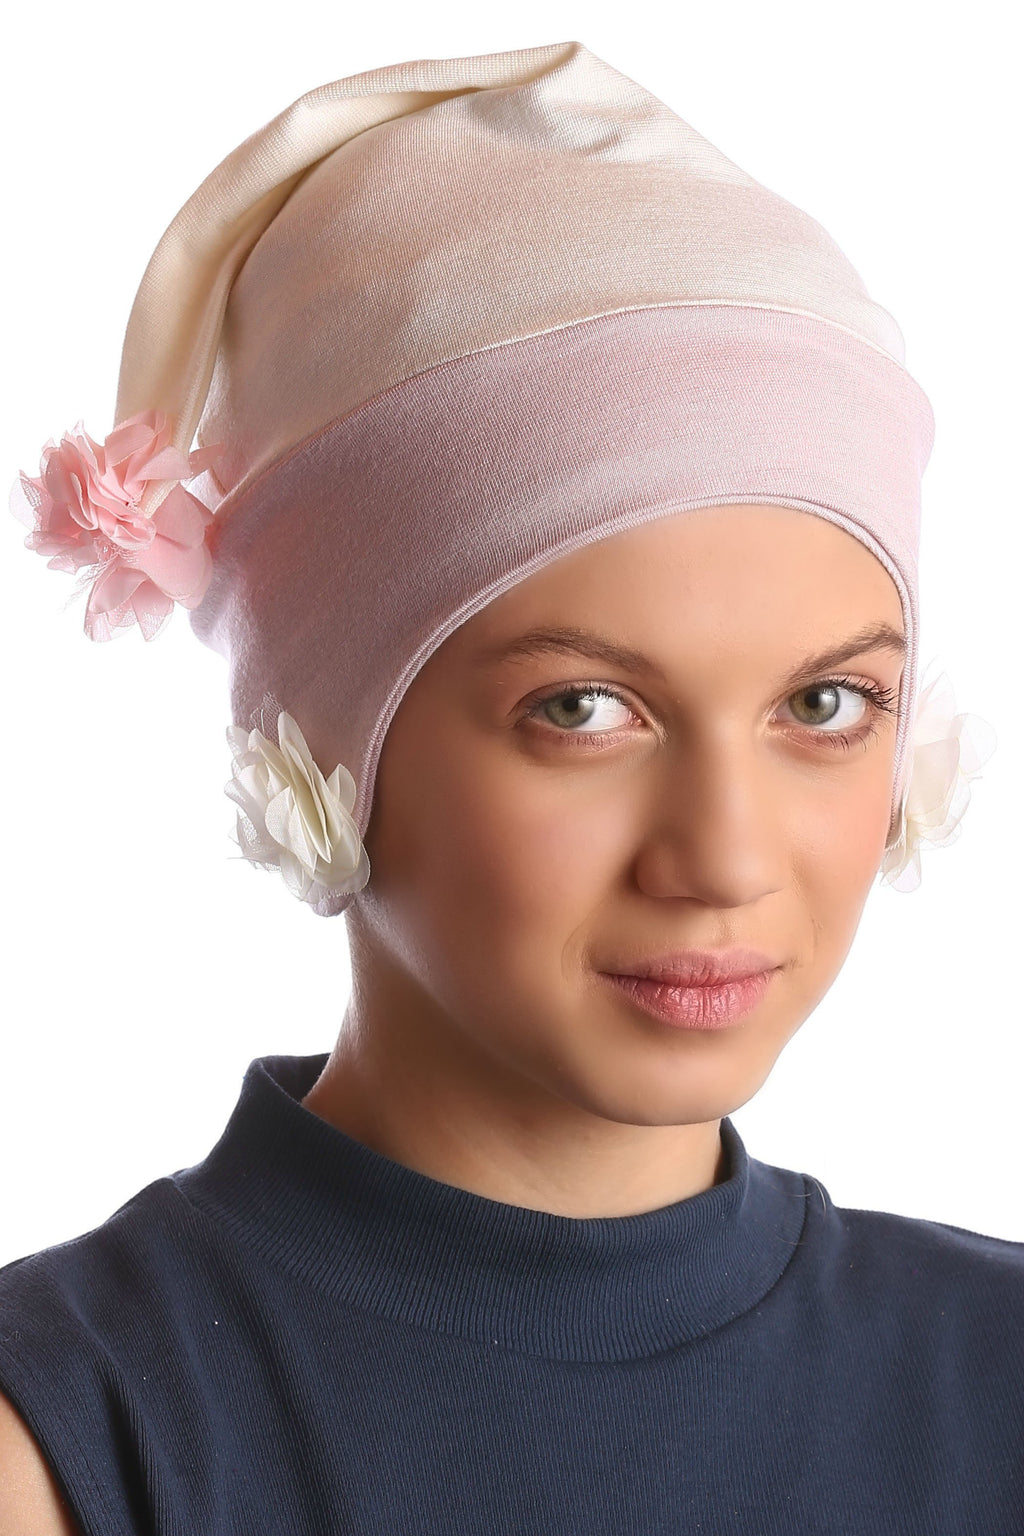 Deresina teen ear flap beanie for hairloss pink cream